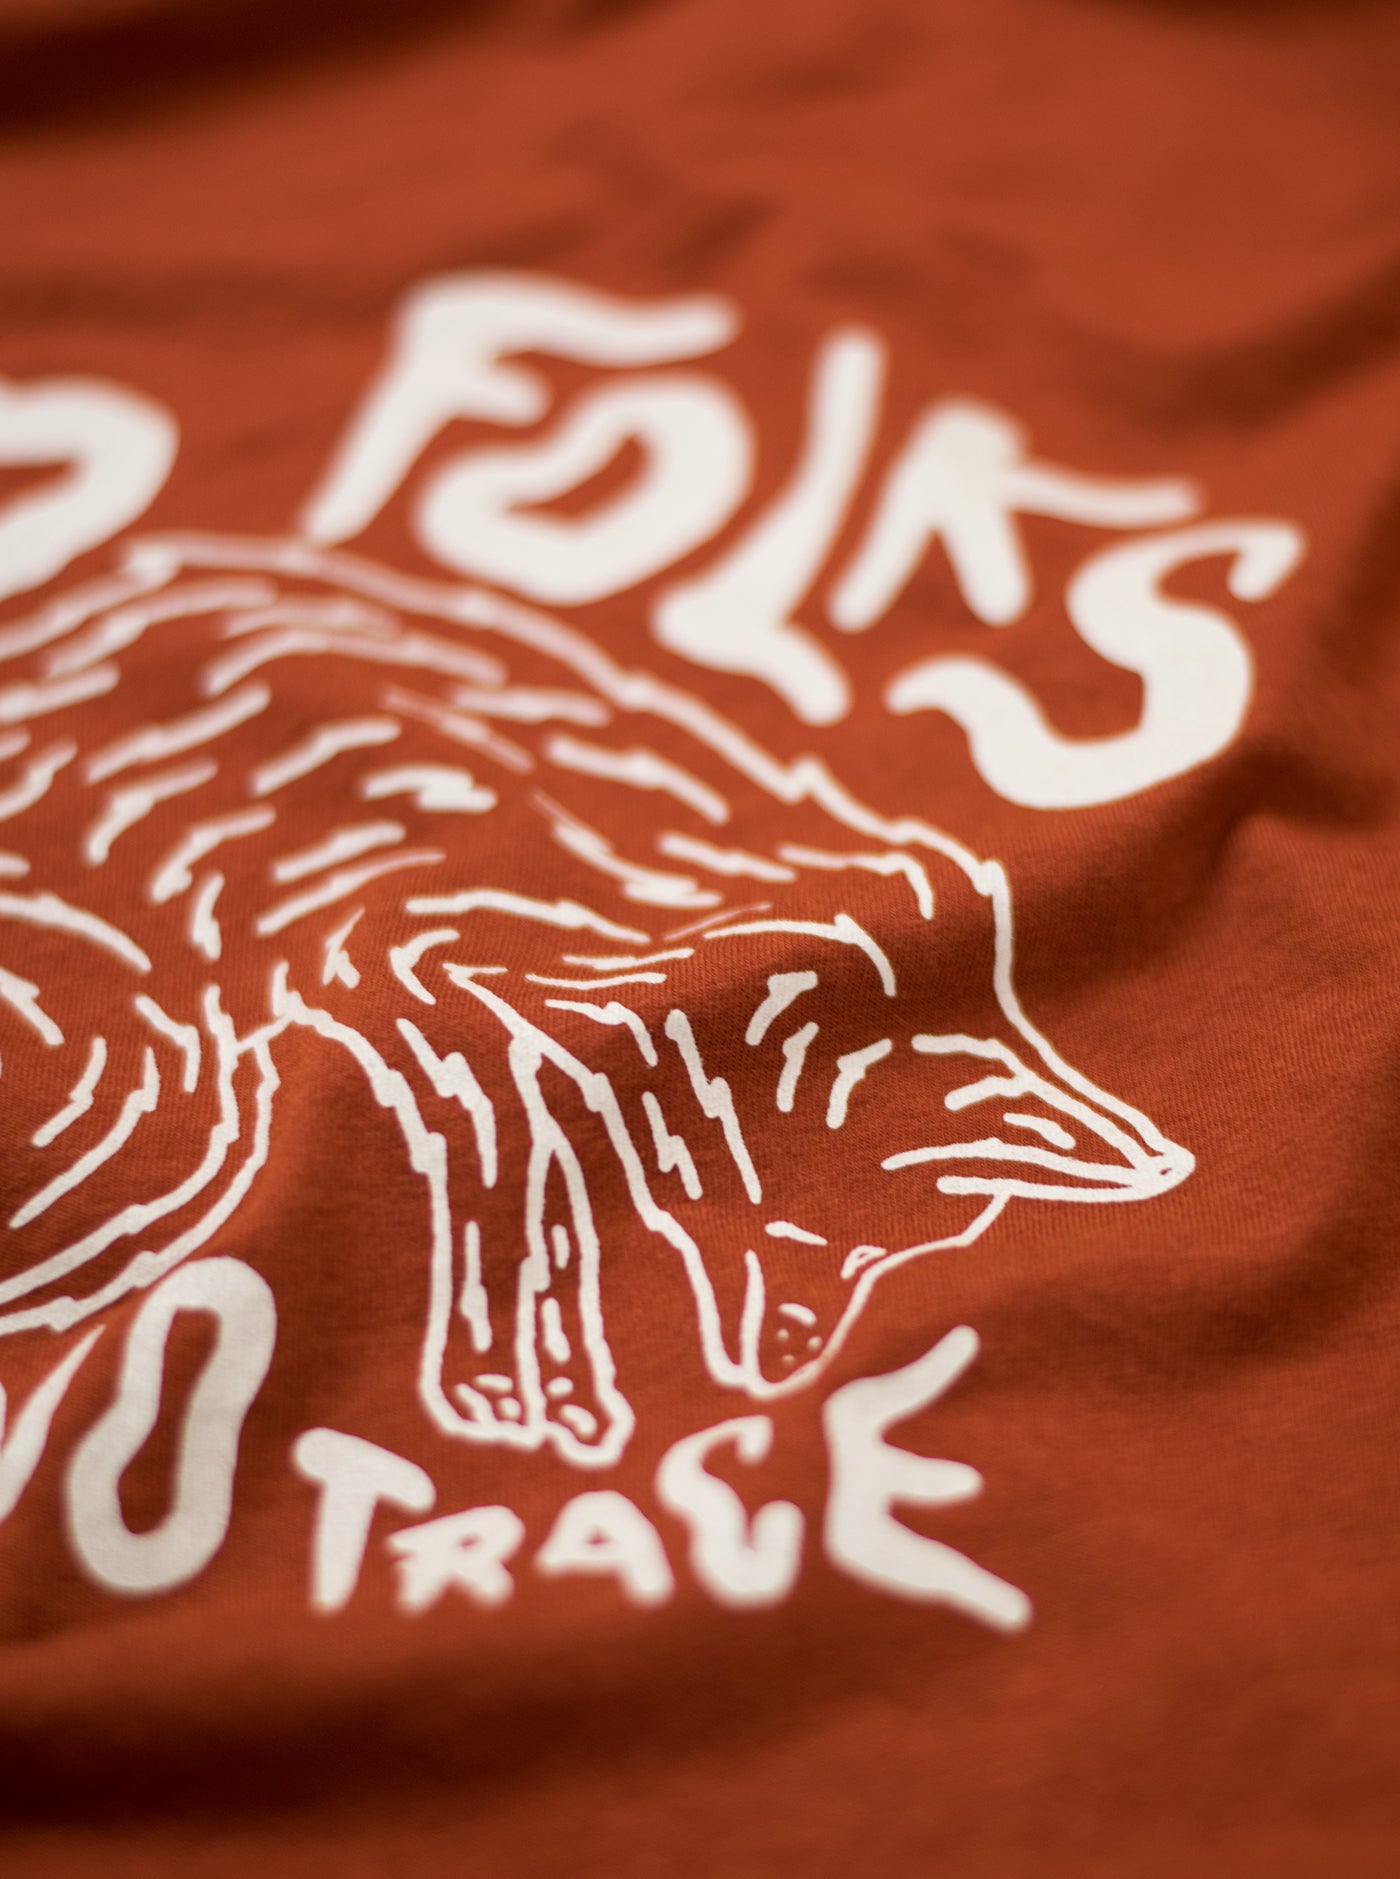 Escapade Unisex T-Shirt - Good Folks Leave No Trace